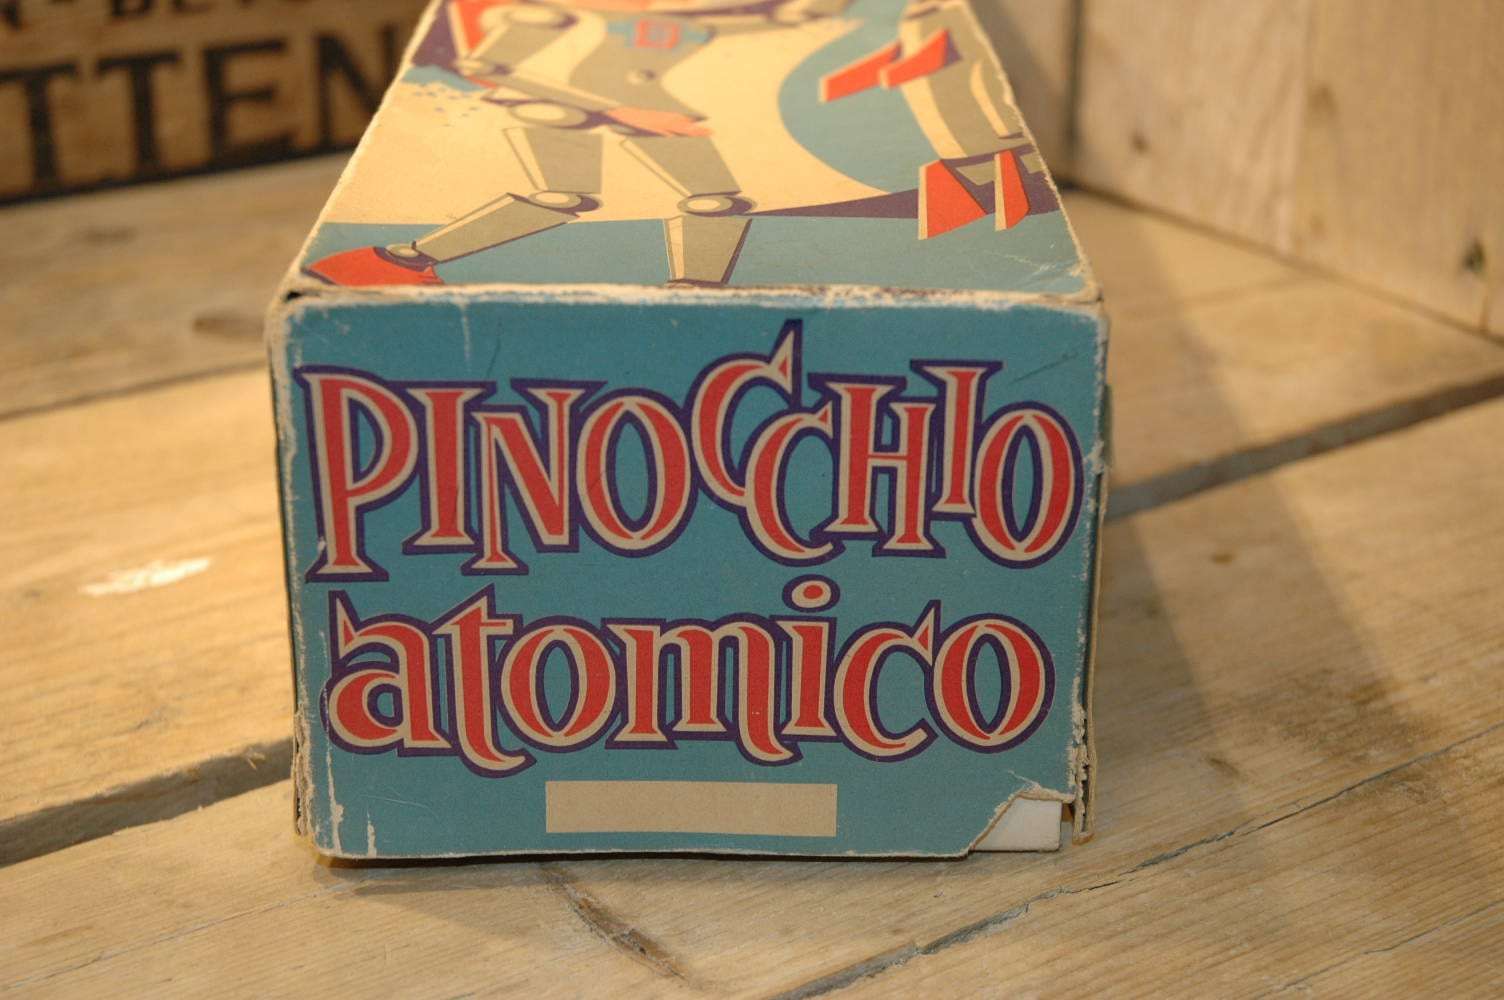 Italy Milano Vietata - Pinocchio Atomico by Dan Voidod